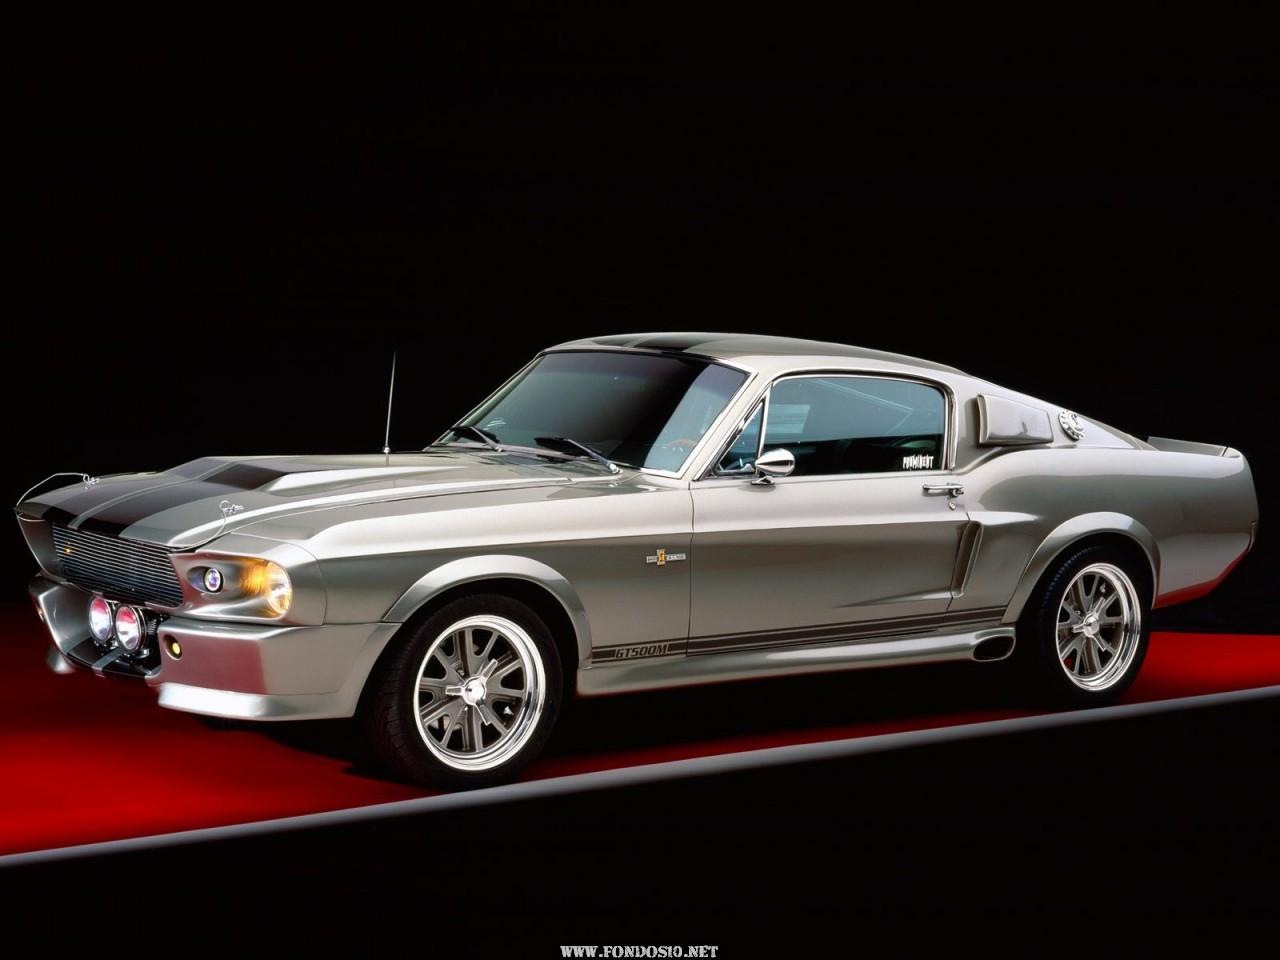 Ford Mustang Gt Modelo Imagenes De Carros